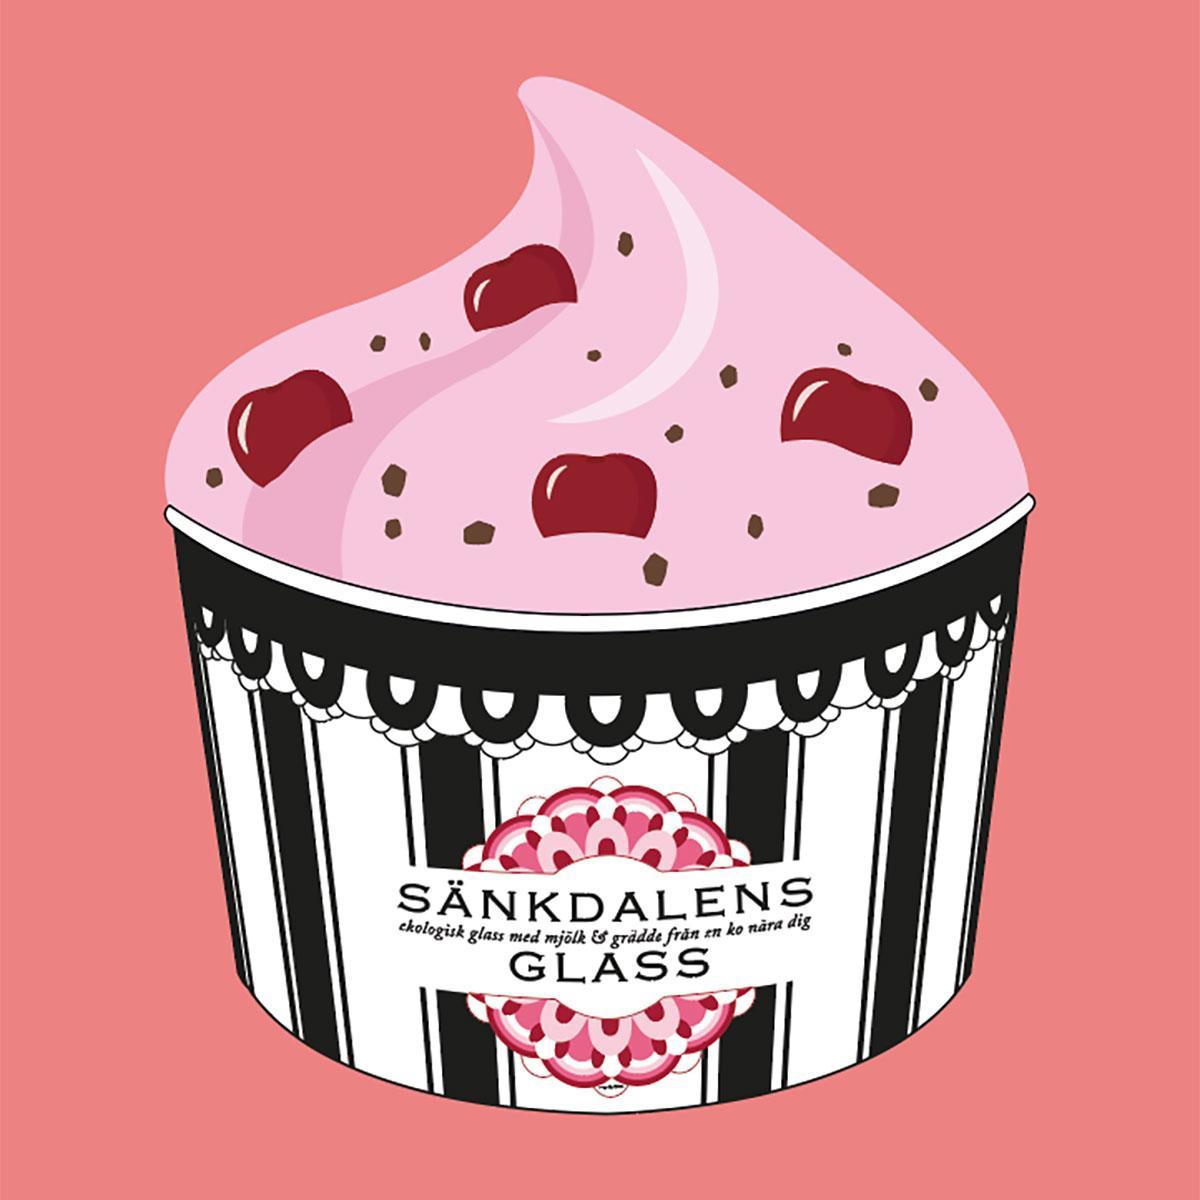 Sänkdalens glass's Cherry Ice Cream '